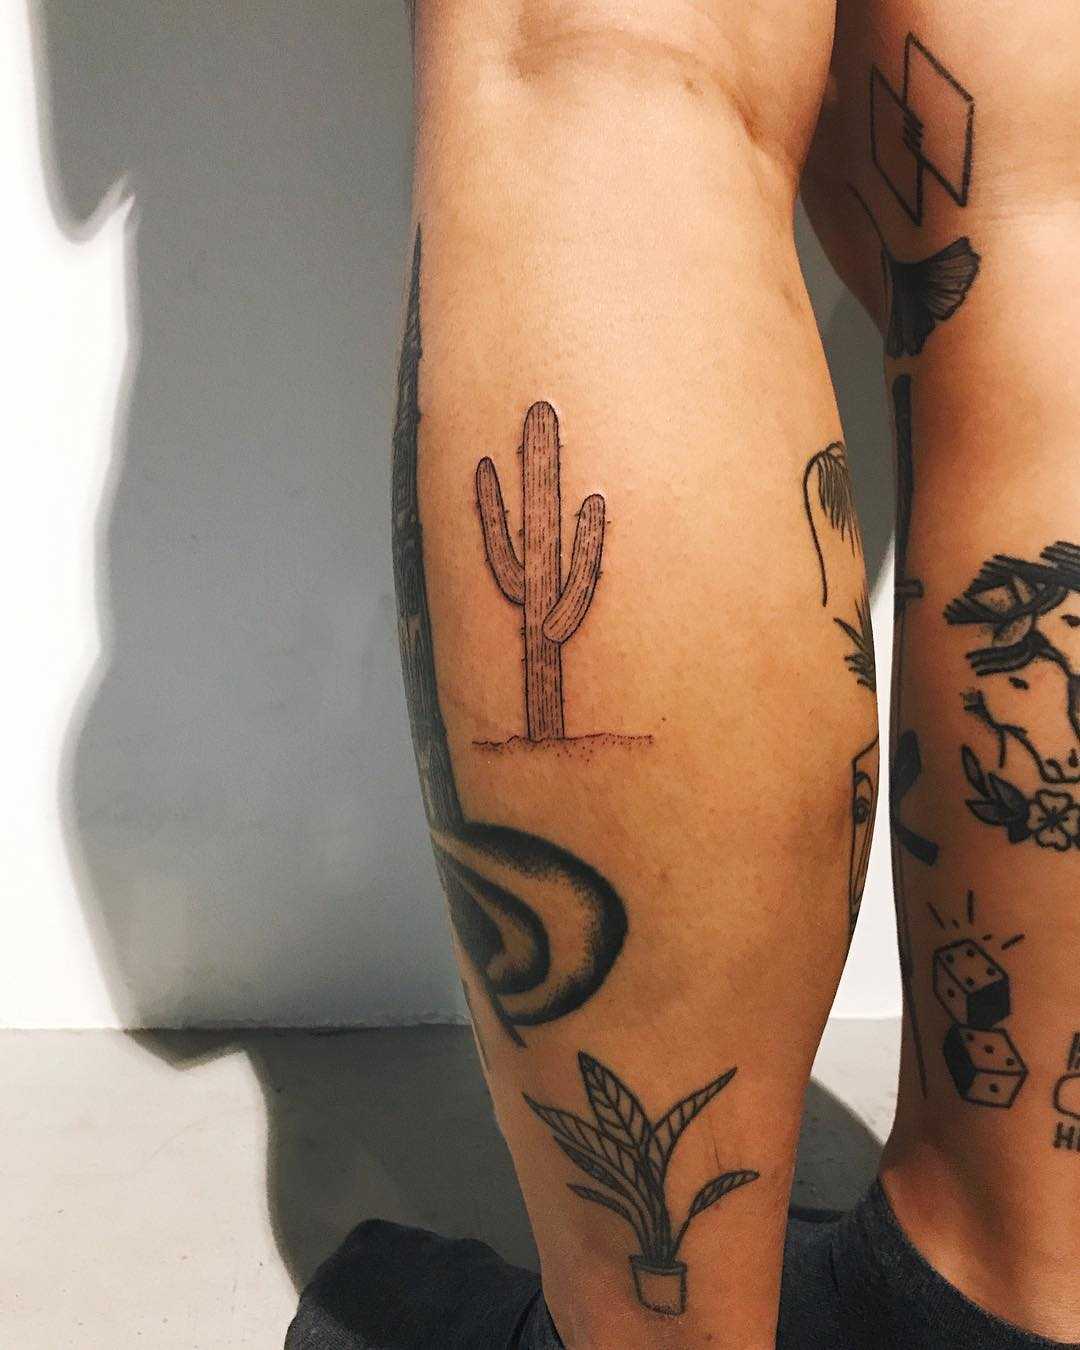 Small cactus tattoo on the calf by Kelli Kikcio